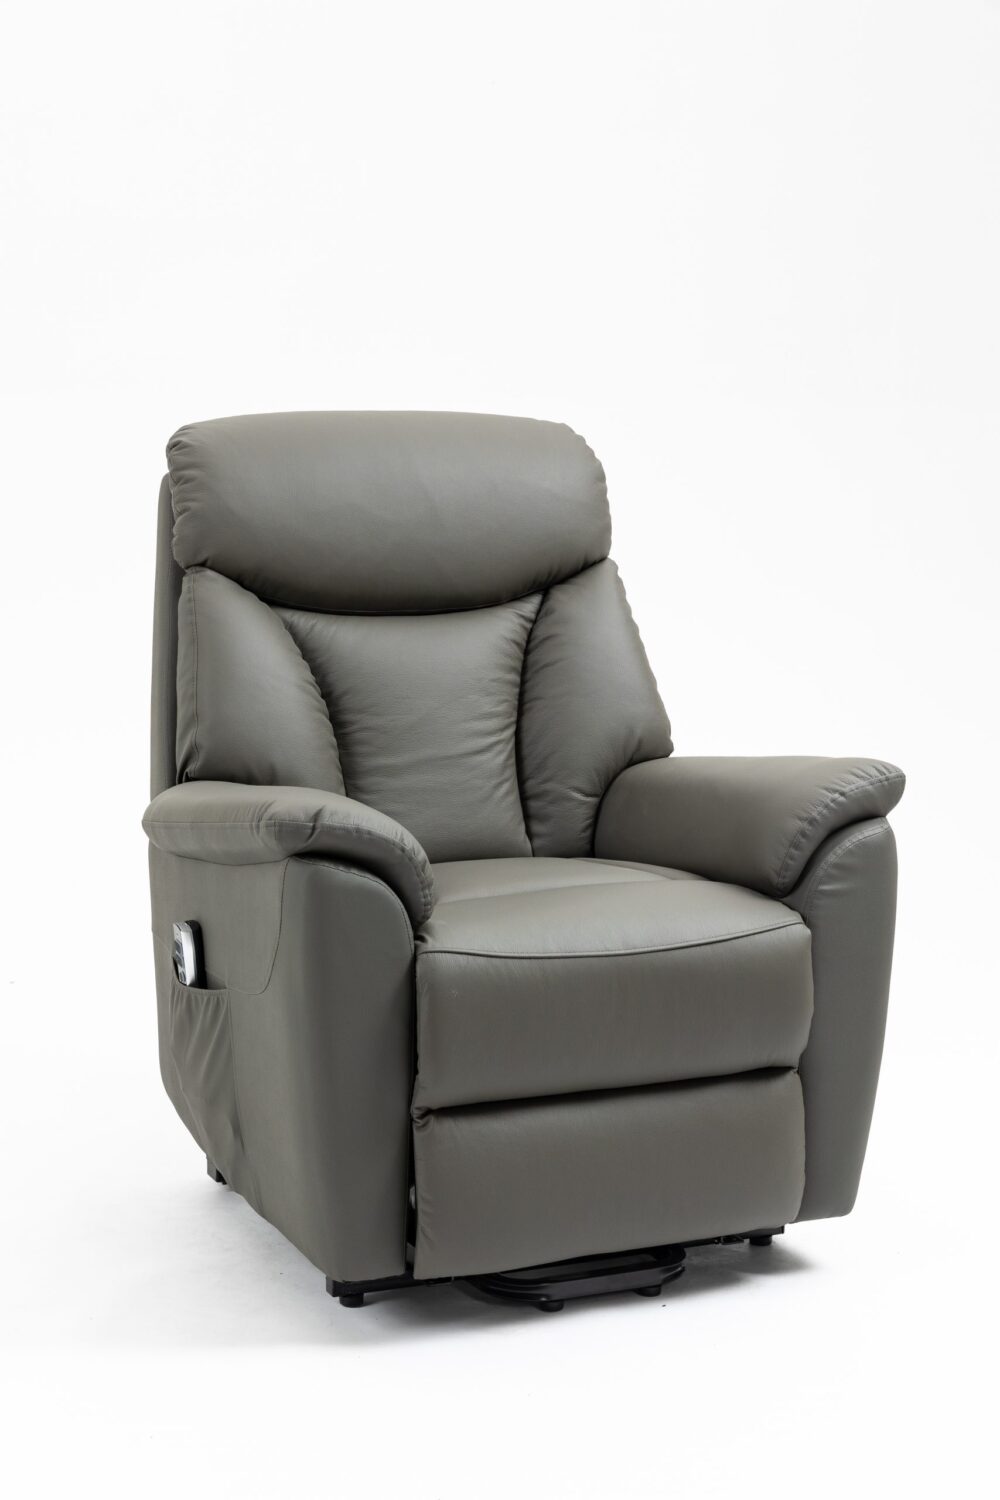 Ohio Dual Motor Lift Chair in Leather Dark Grey